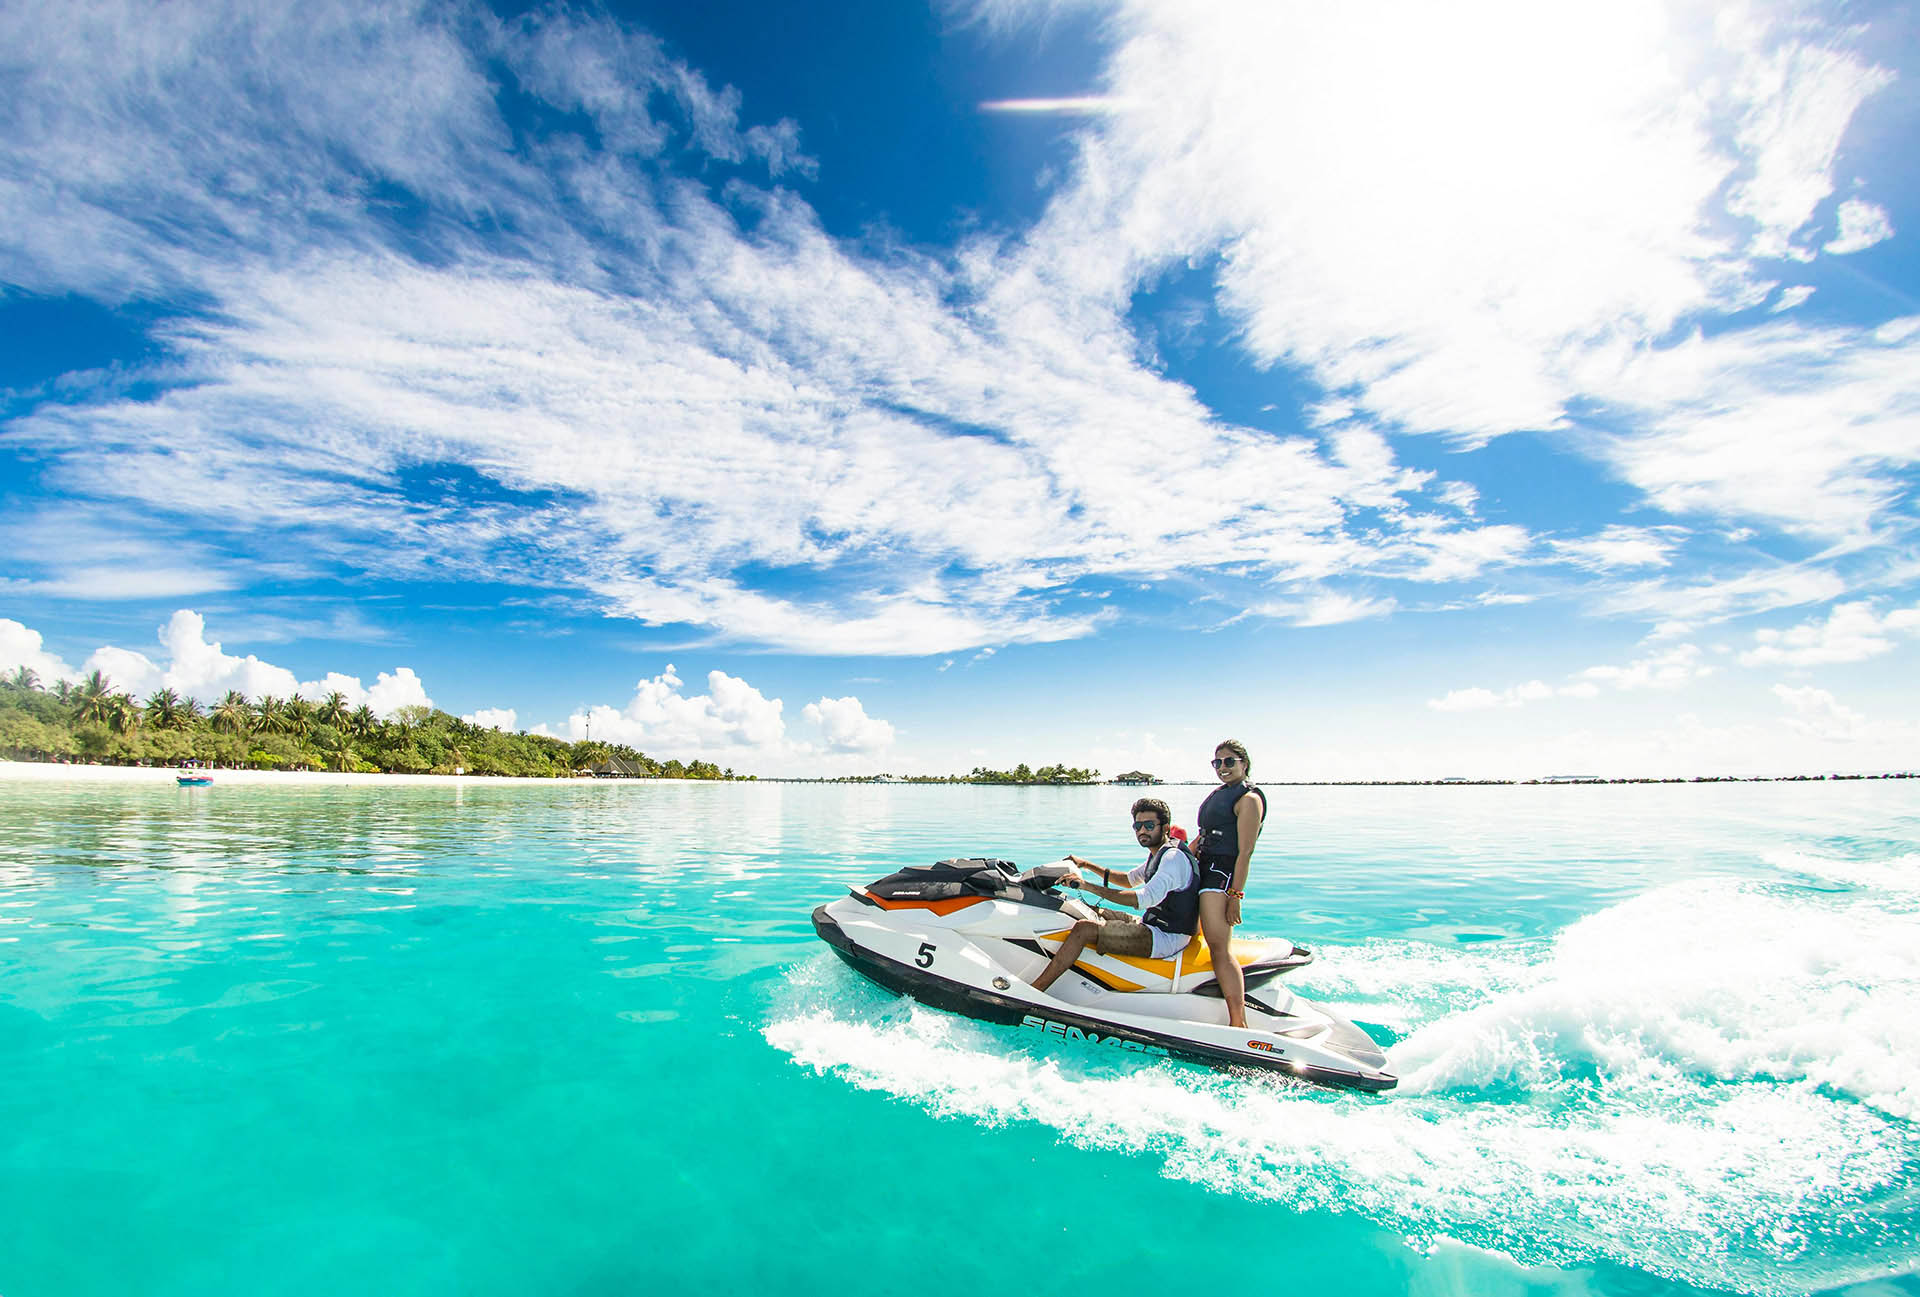 Water activities in Maldives